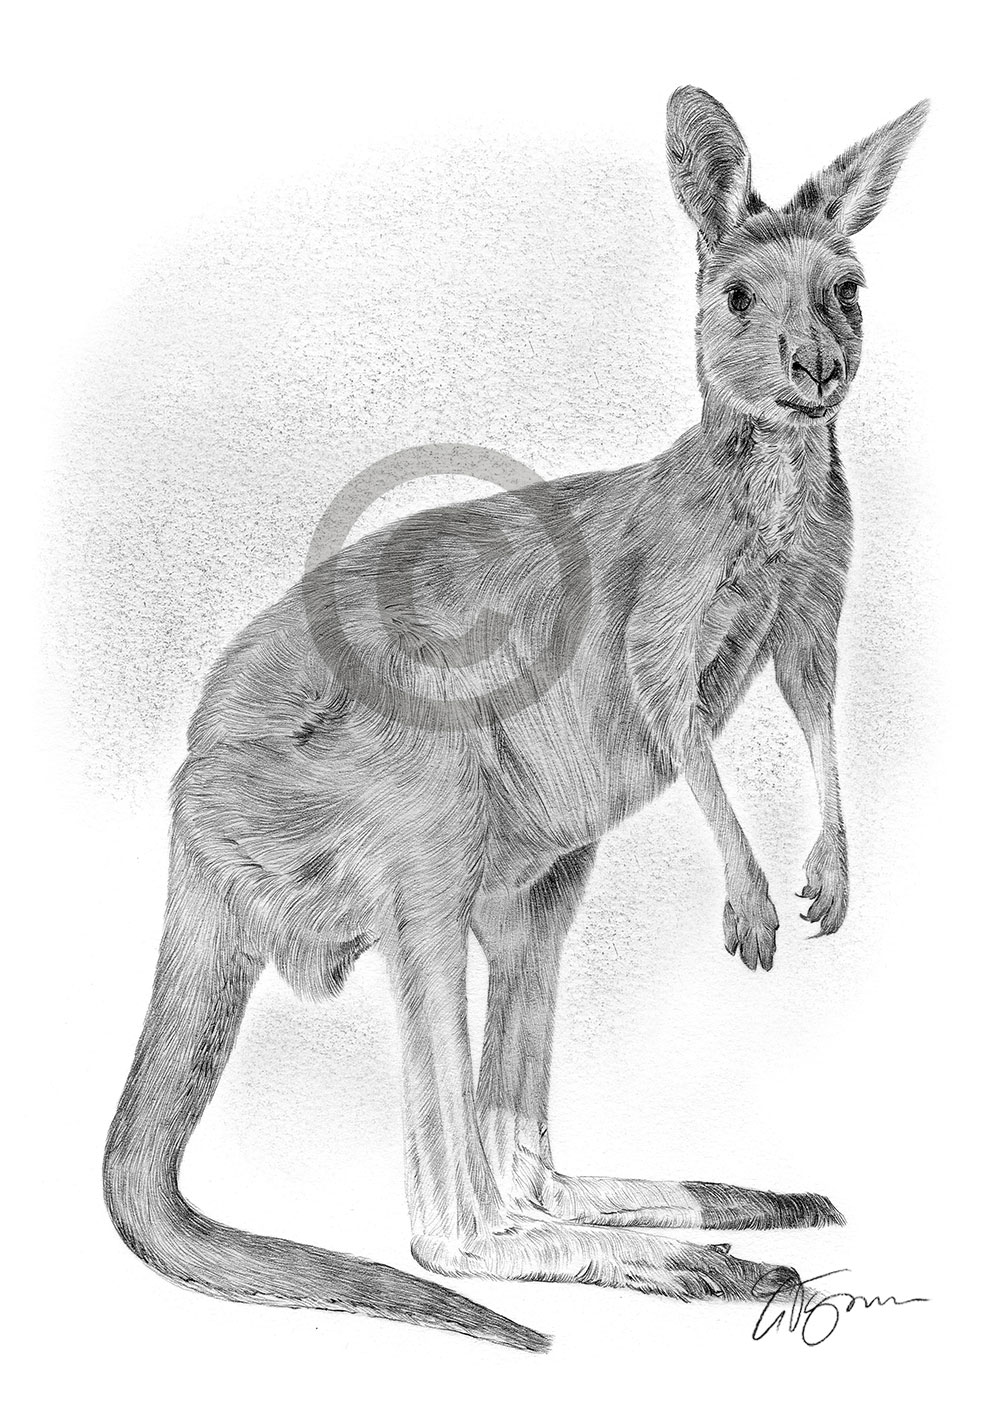 Pencil drawing of an adult kangaroo by artist Gary Tymon